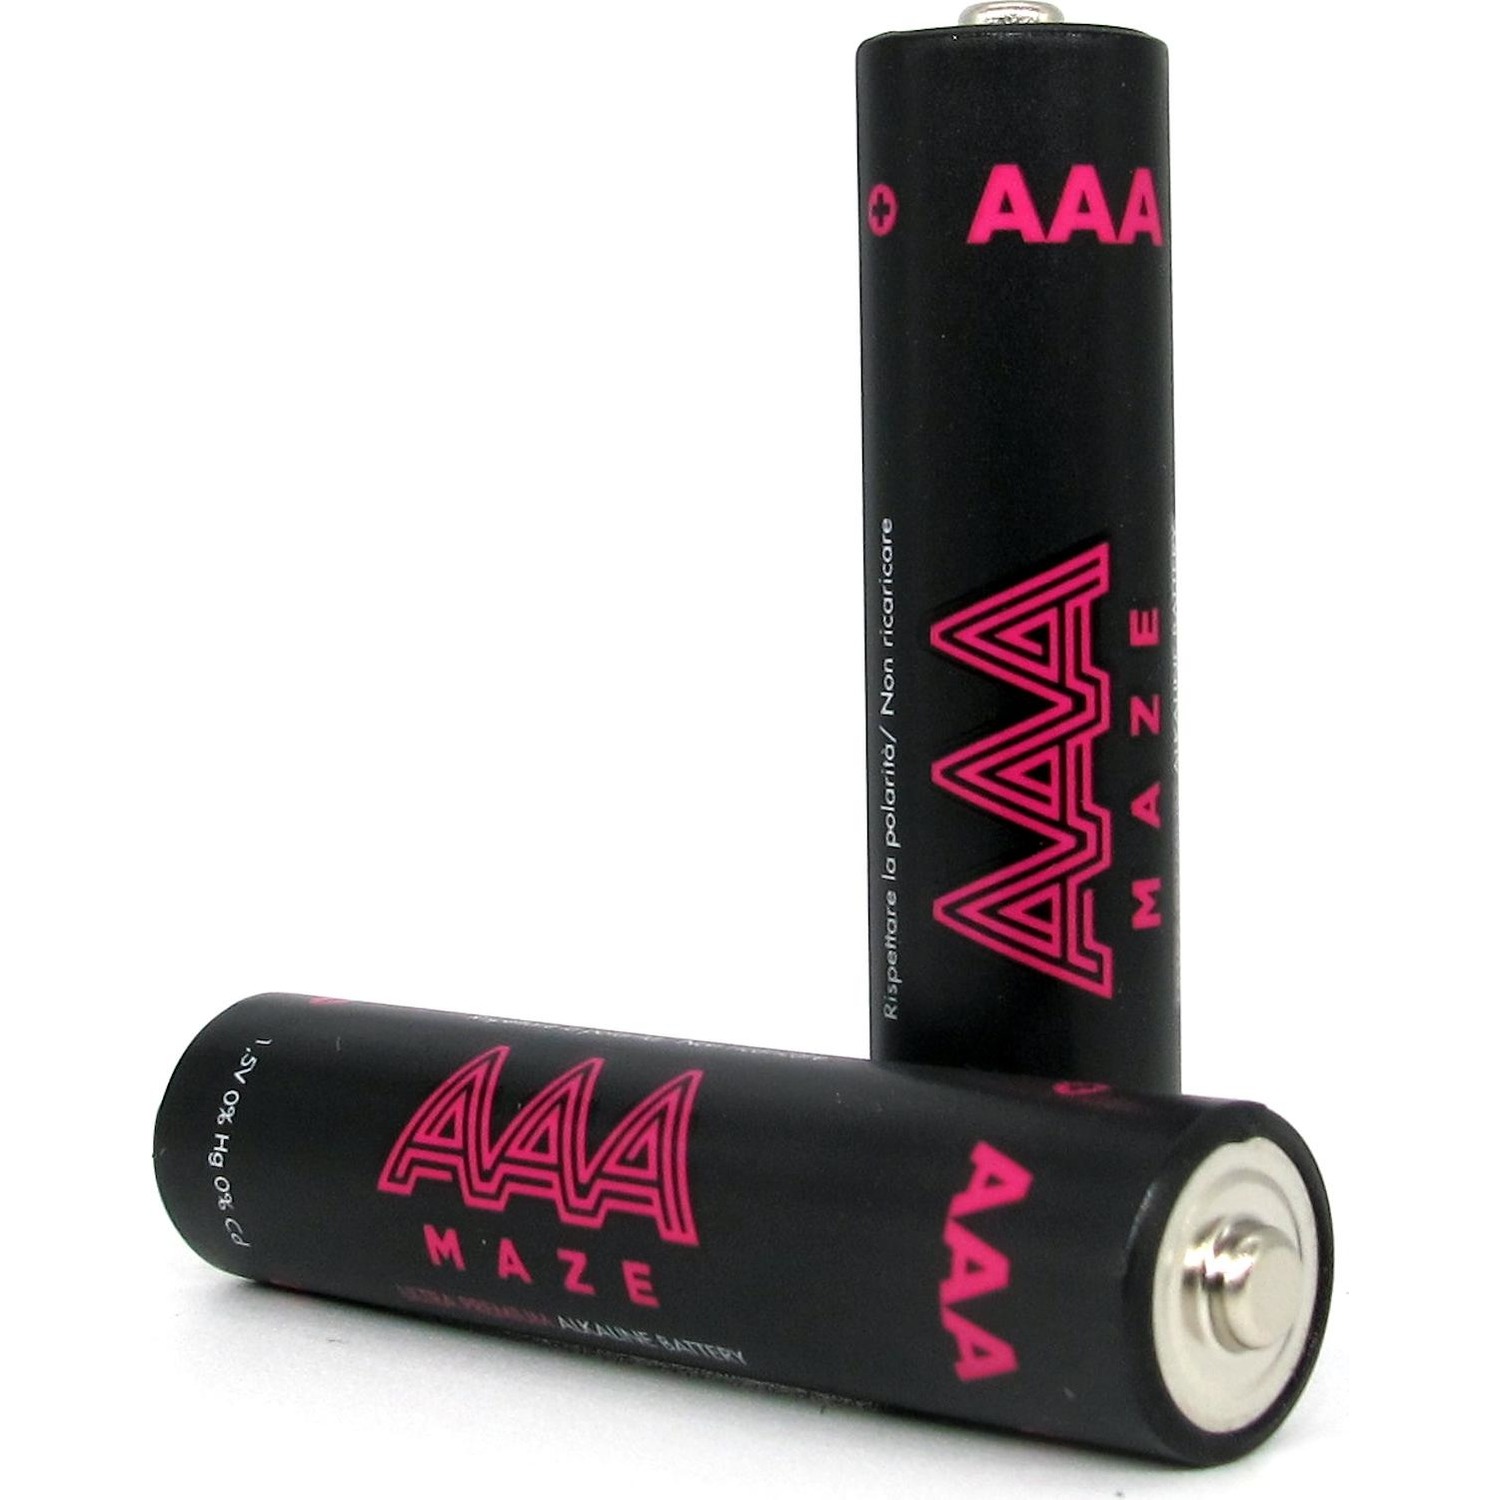 Immagine per Pile alcalina AAAmaze ministilo ultra premium AAA blister 4 pezzi AMET0006 da DIMOStore